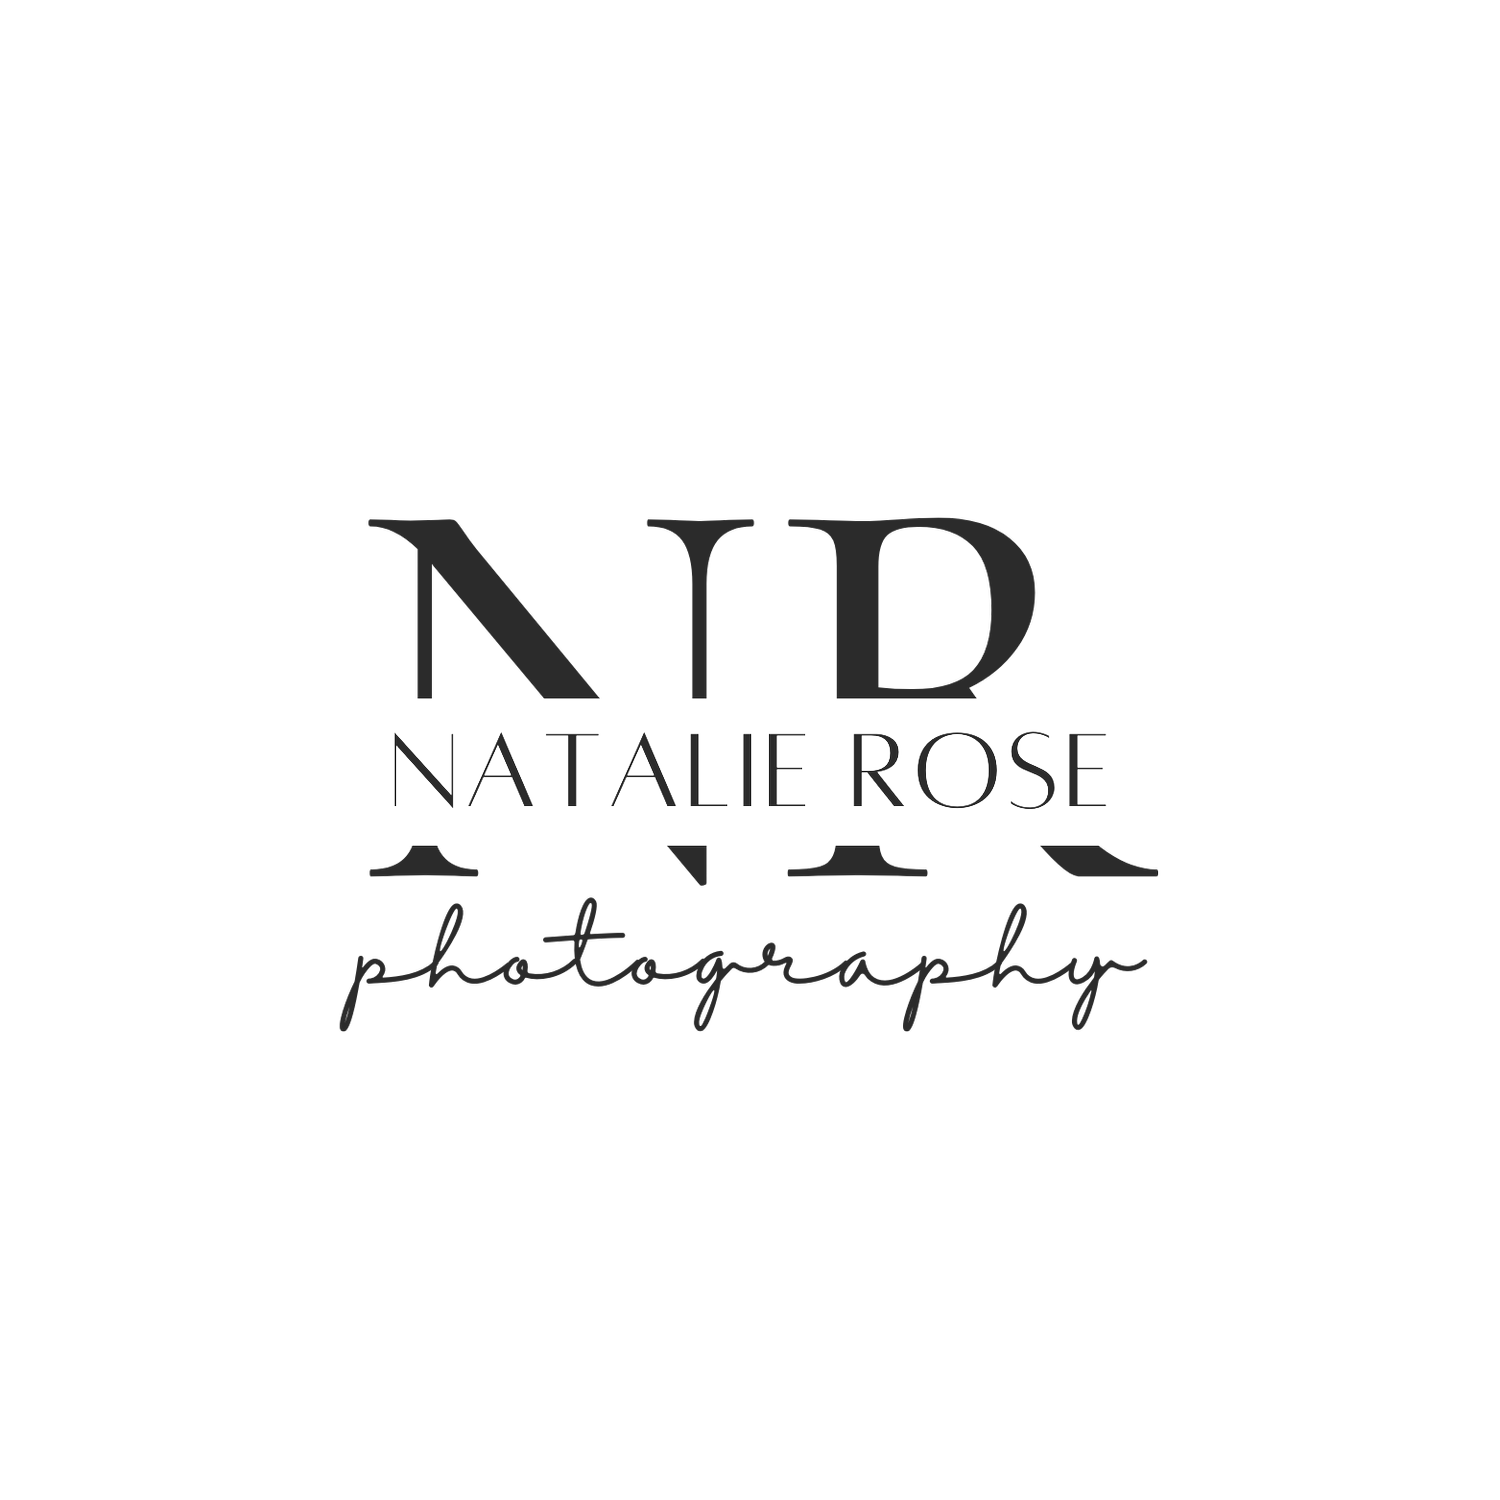 Natalie Rose Photography